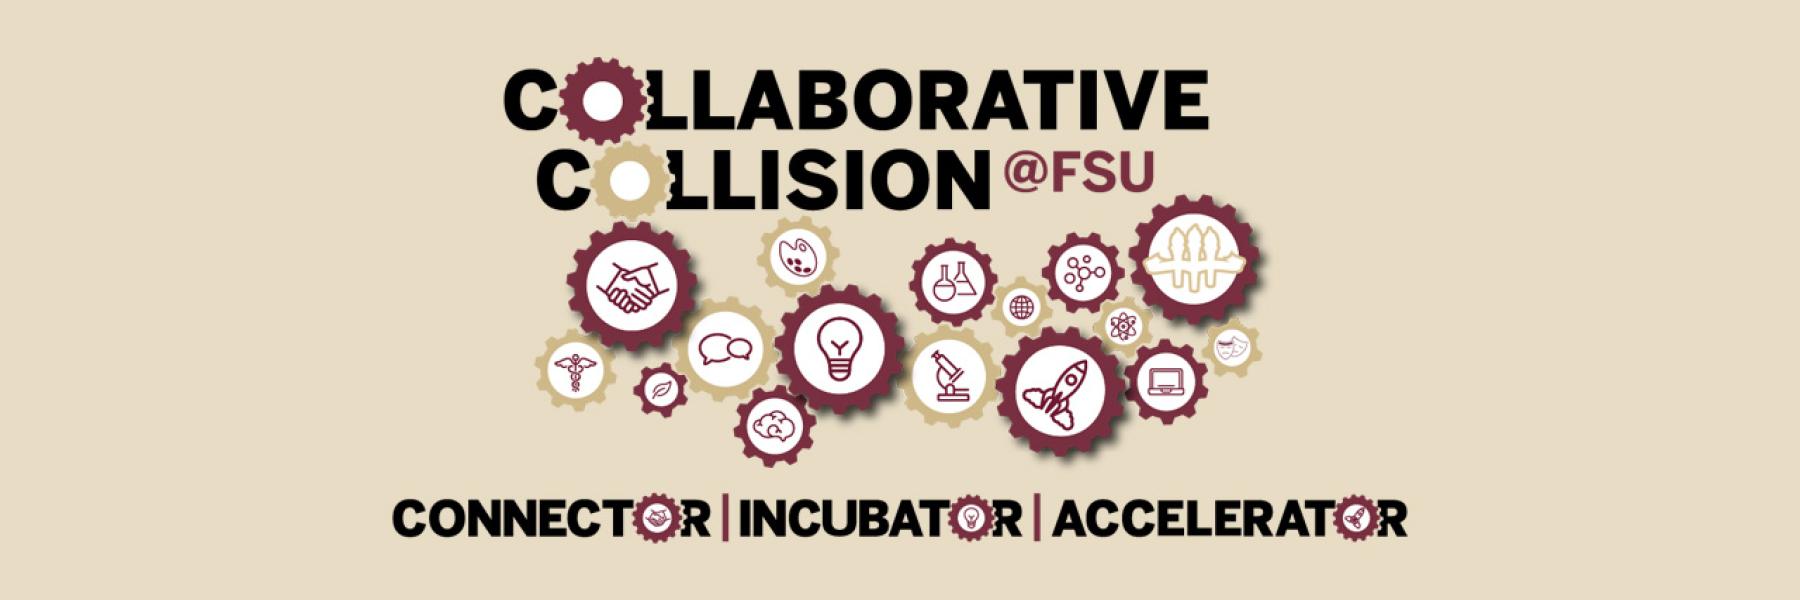 Collaborative Collision Banner